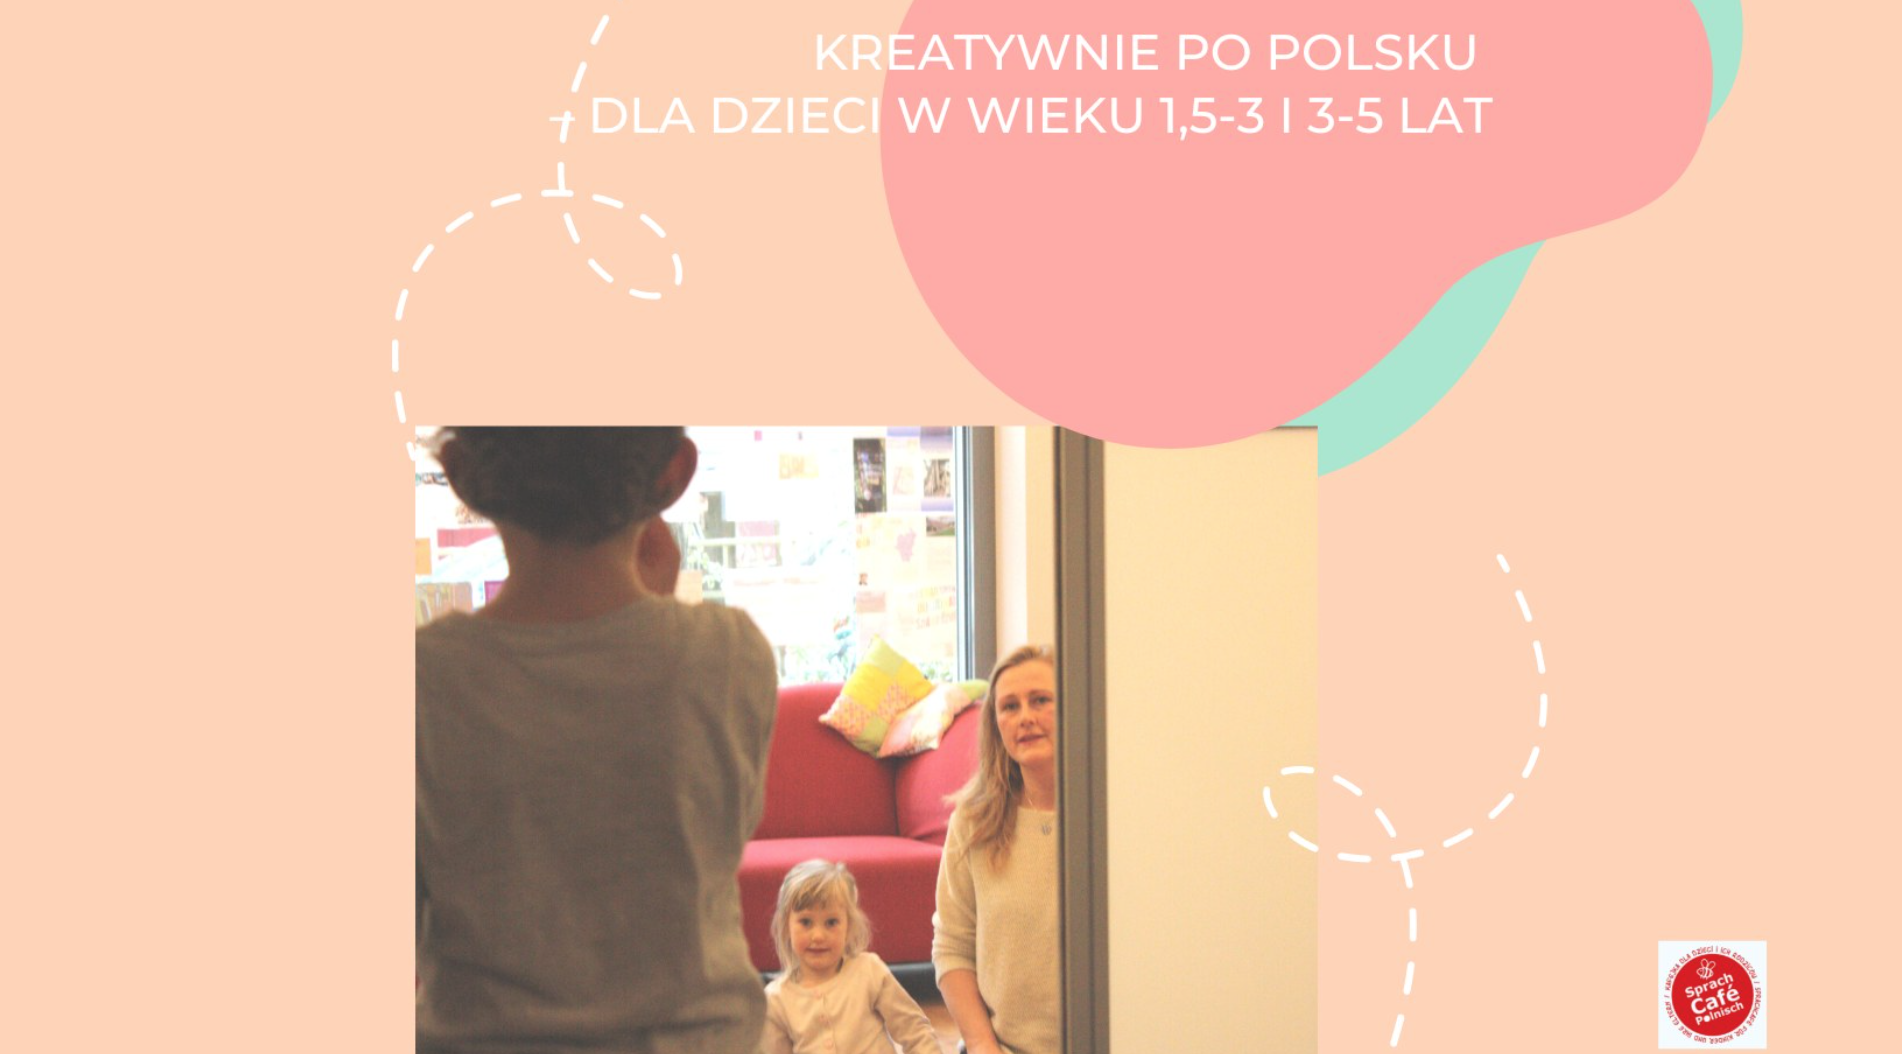 SprachCafé Polnisch e.V.: Kreatives Polnisch für Kinder im Vorschulalter